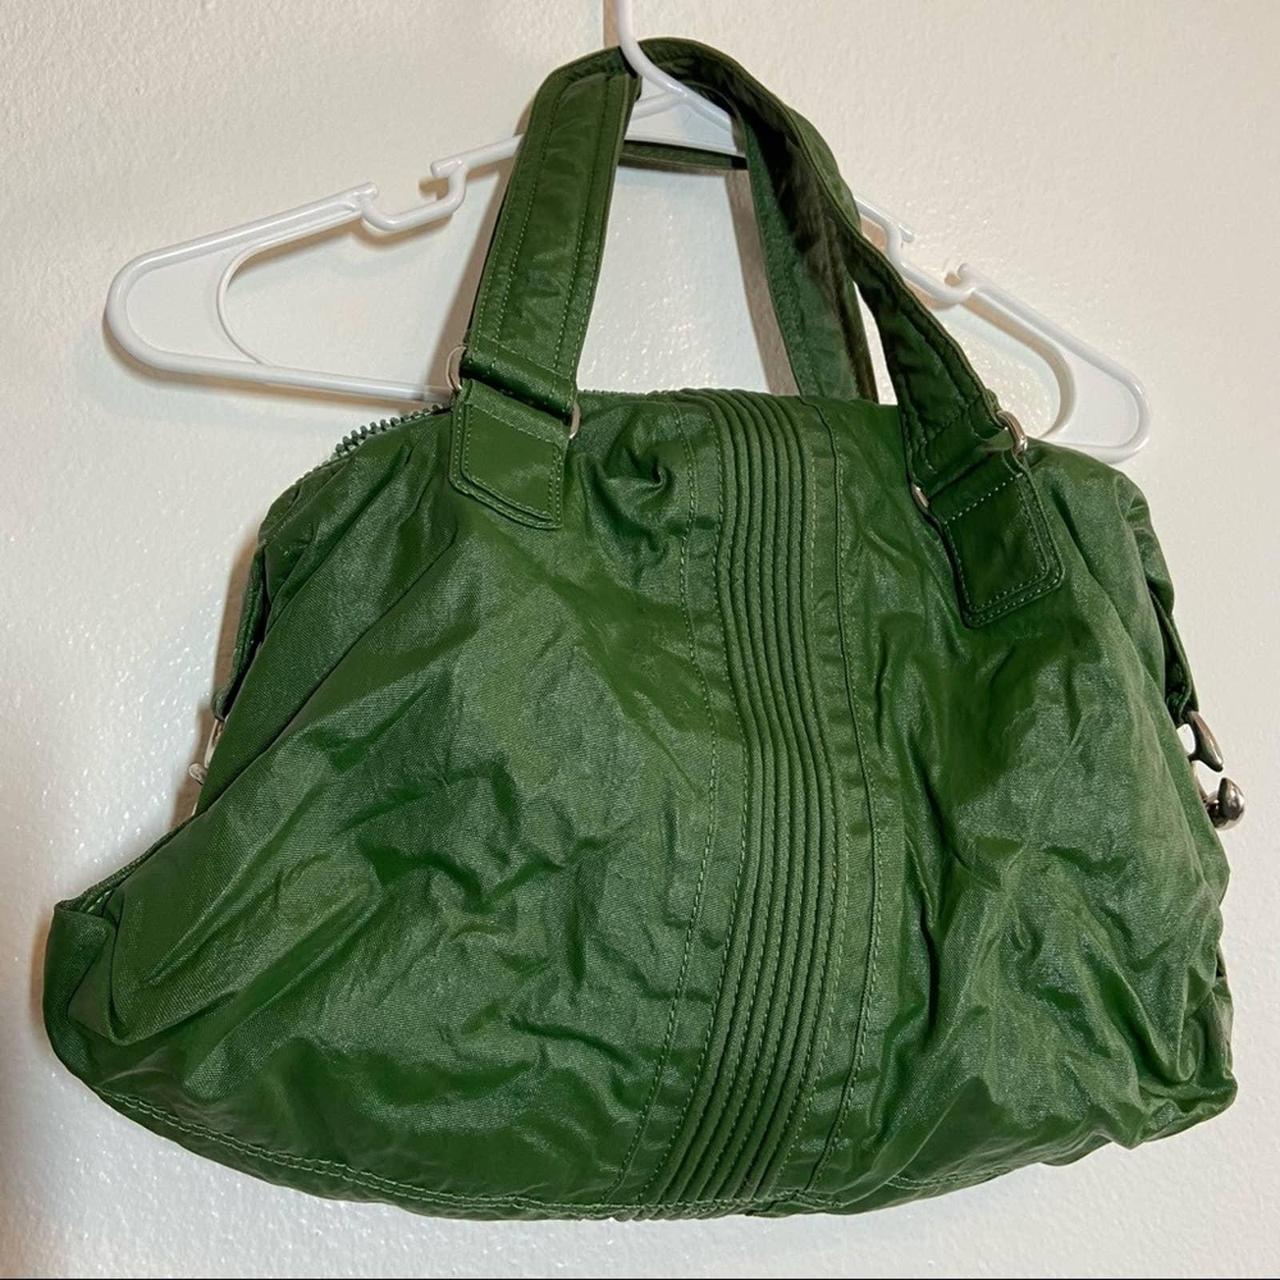 Kipling Women's Green and Silver Bag (4)